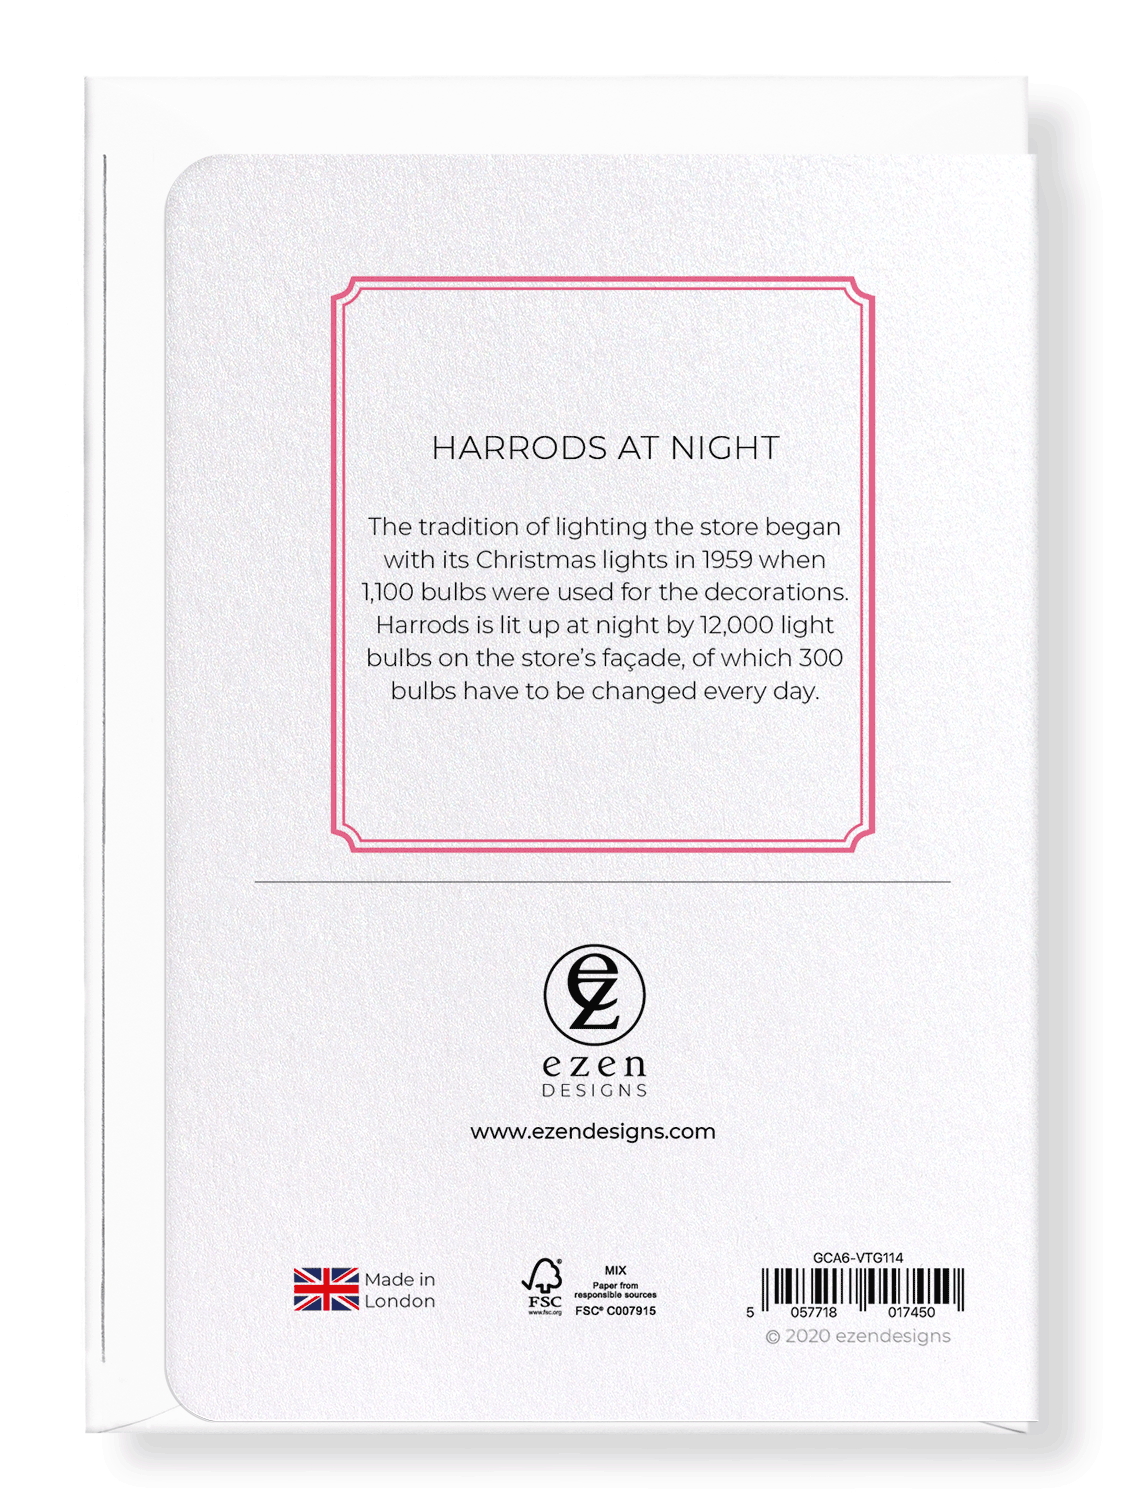 Ezen Designs - Harrods at night - Greeting Card - Back